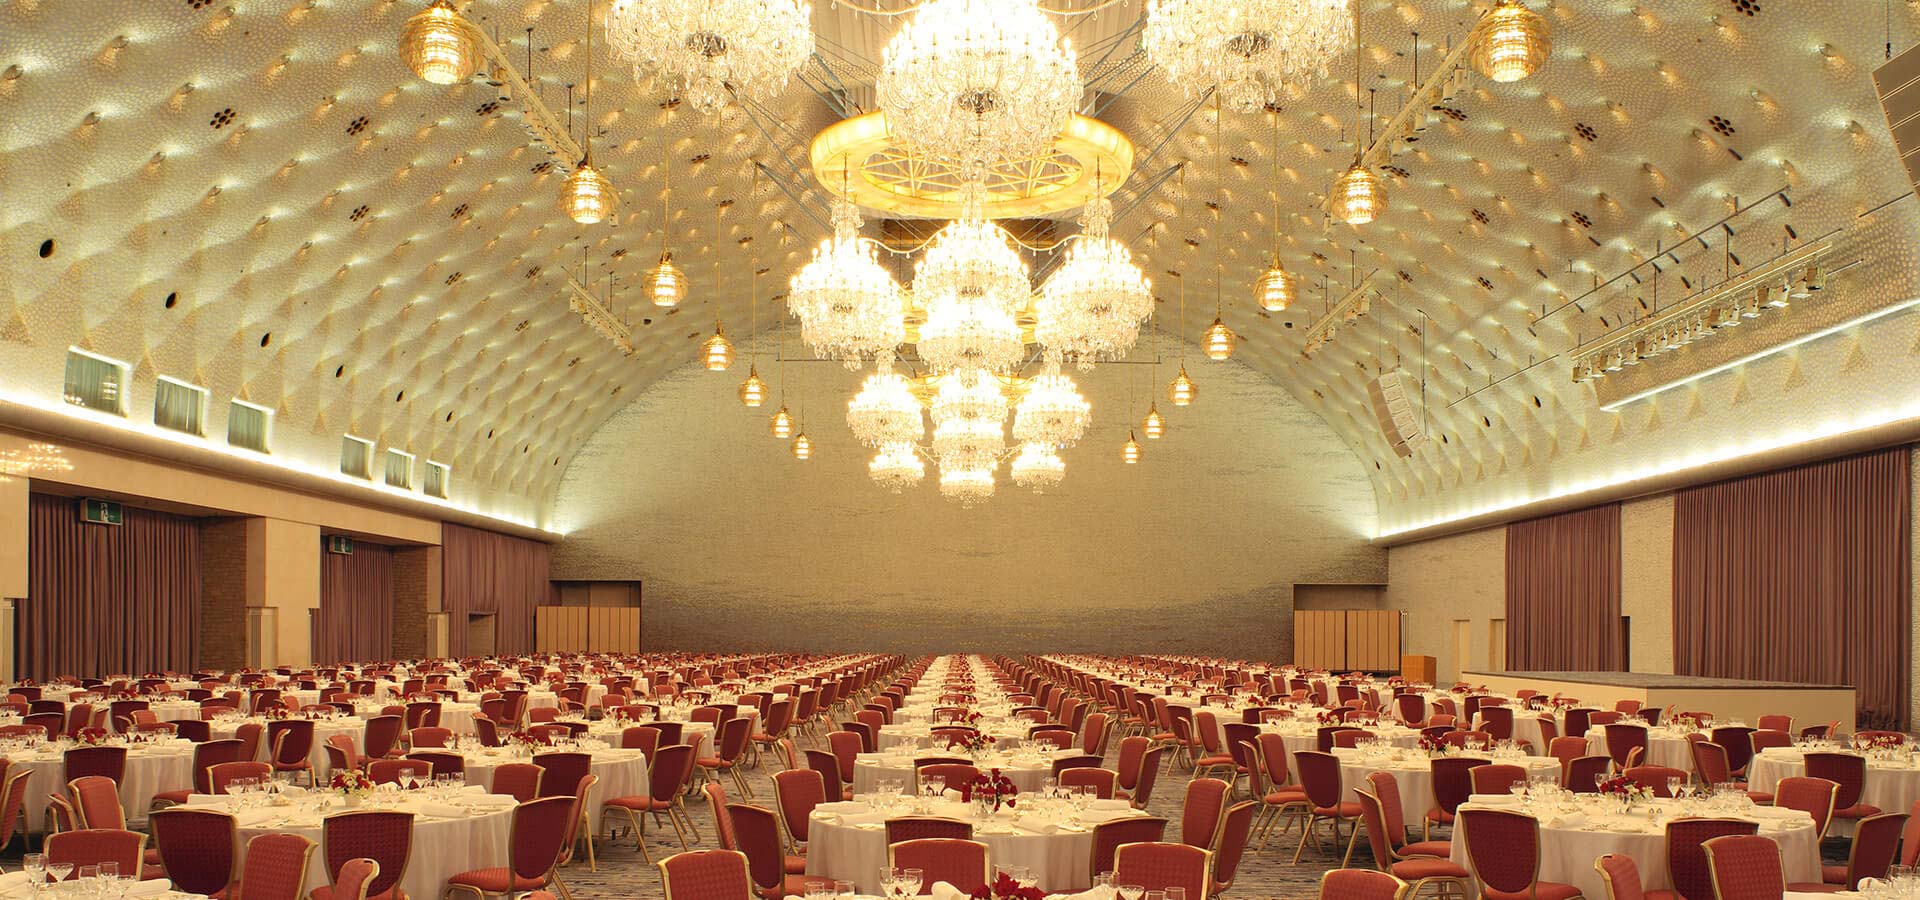 Hiten Main Banquet Hall